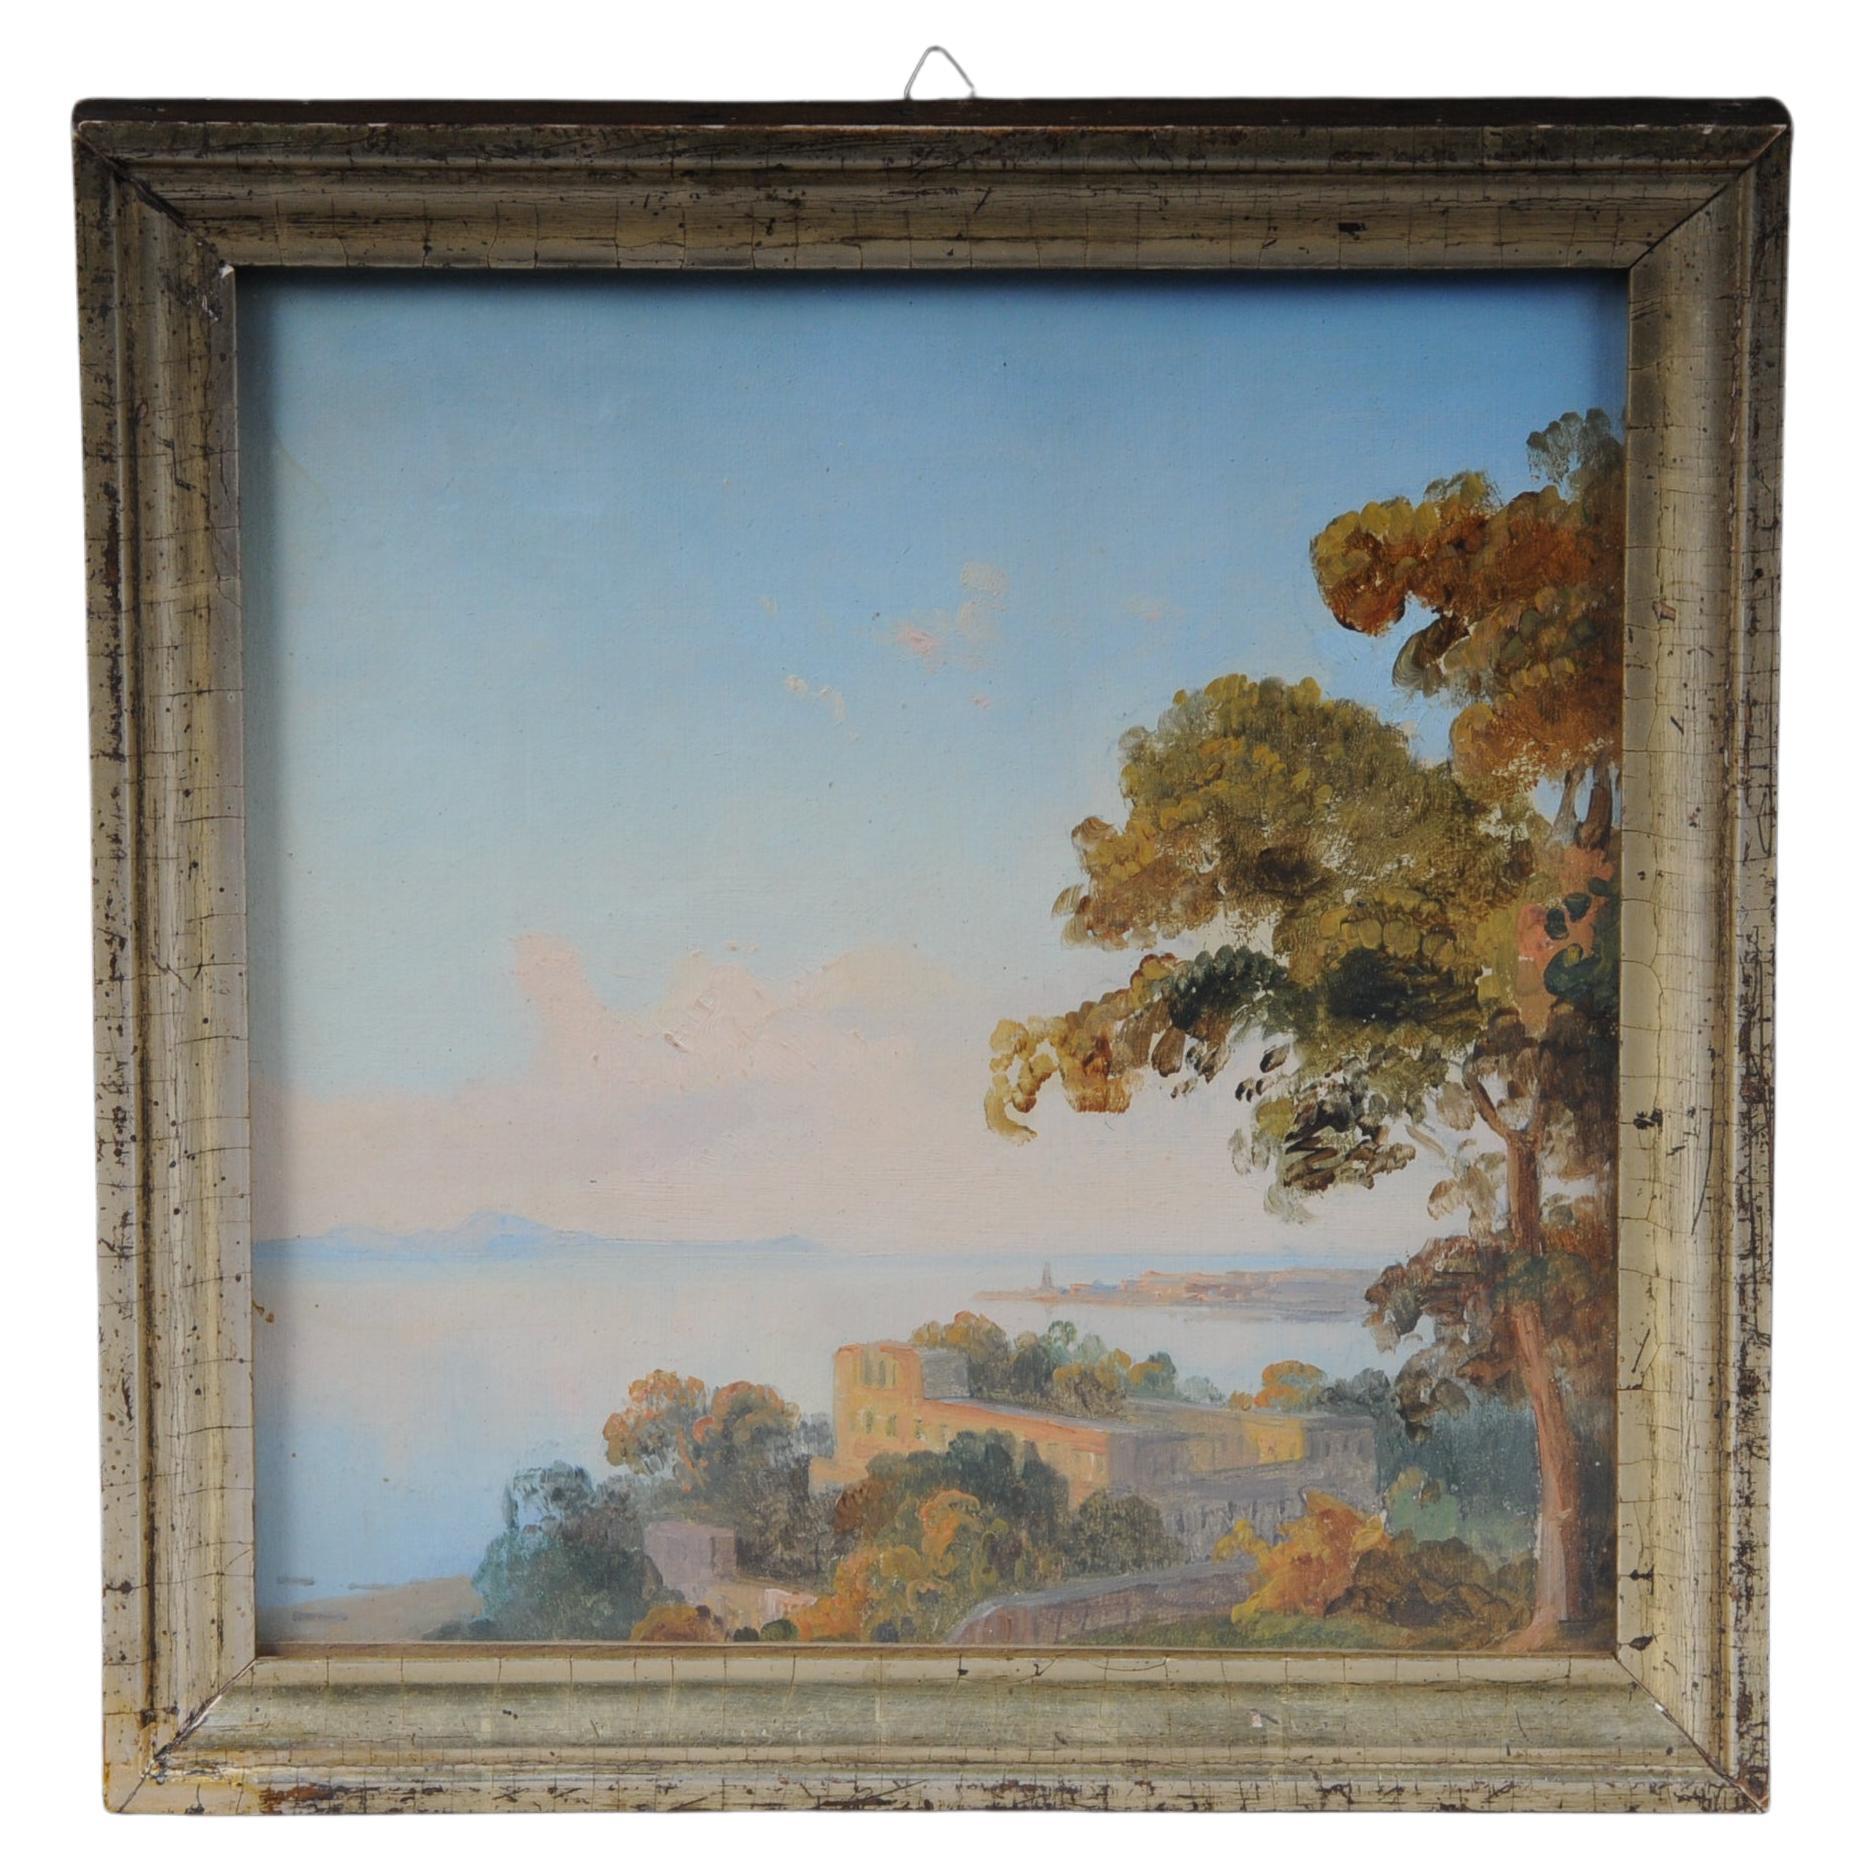 Magnifique peinture à l'huile Paysage Idyll de Carl G. Wegener Potsdam